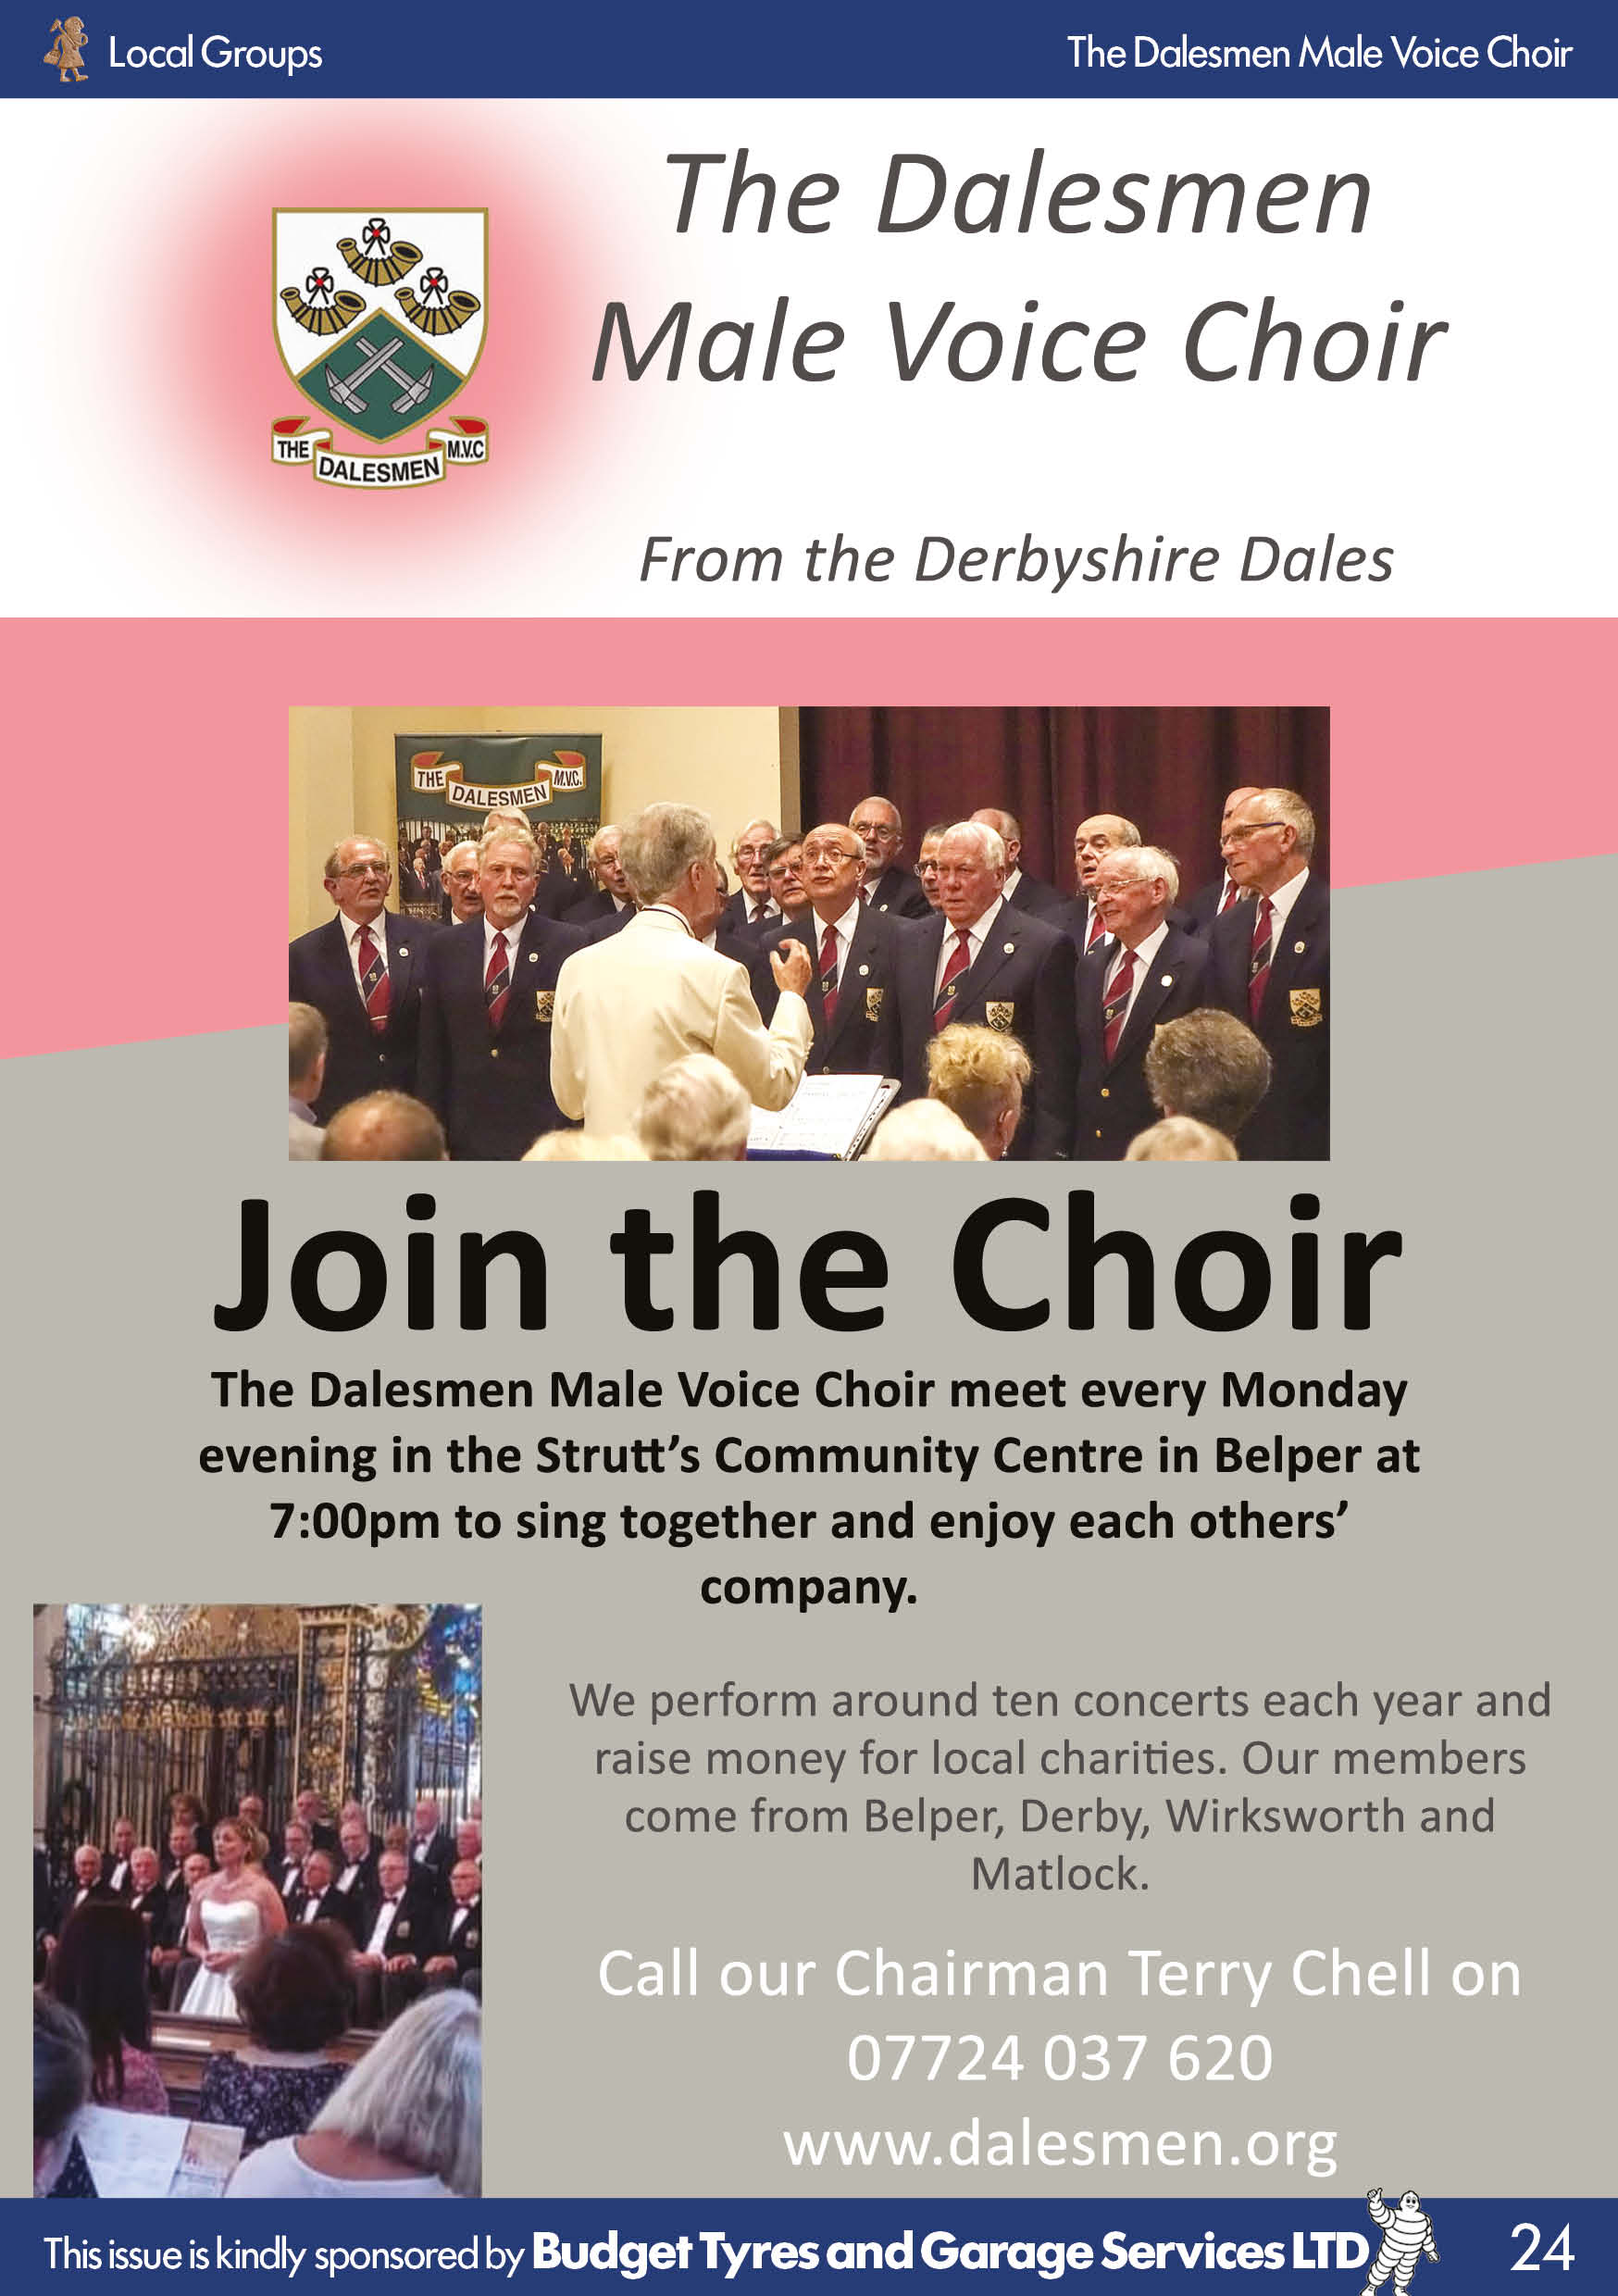 The Dalesmen Male Voice Choir